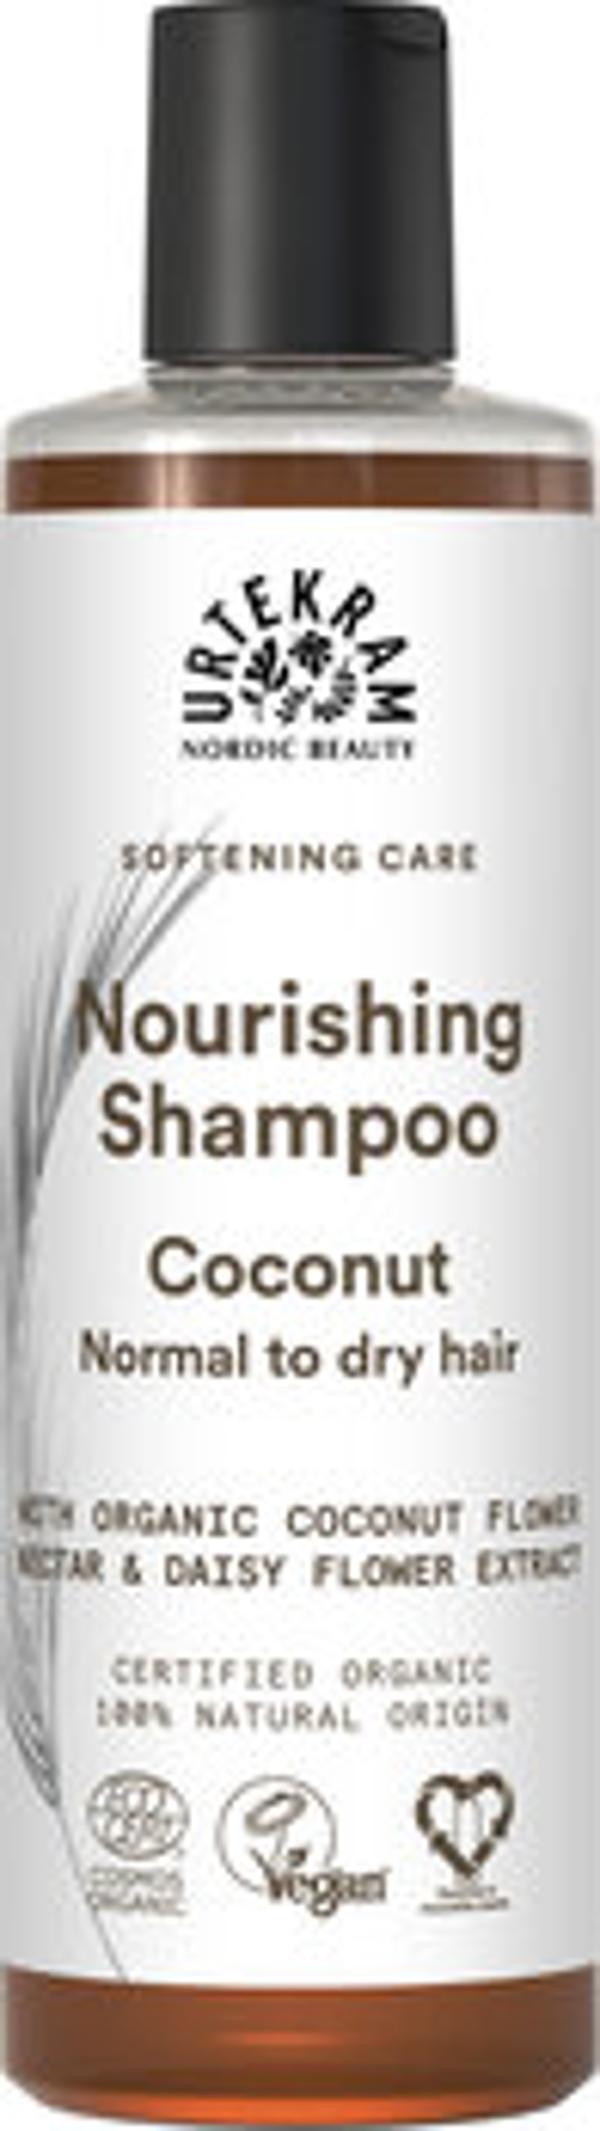 Produktfoto zu Kokos Shampoo - 250ml